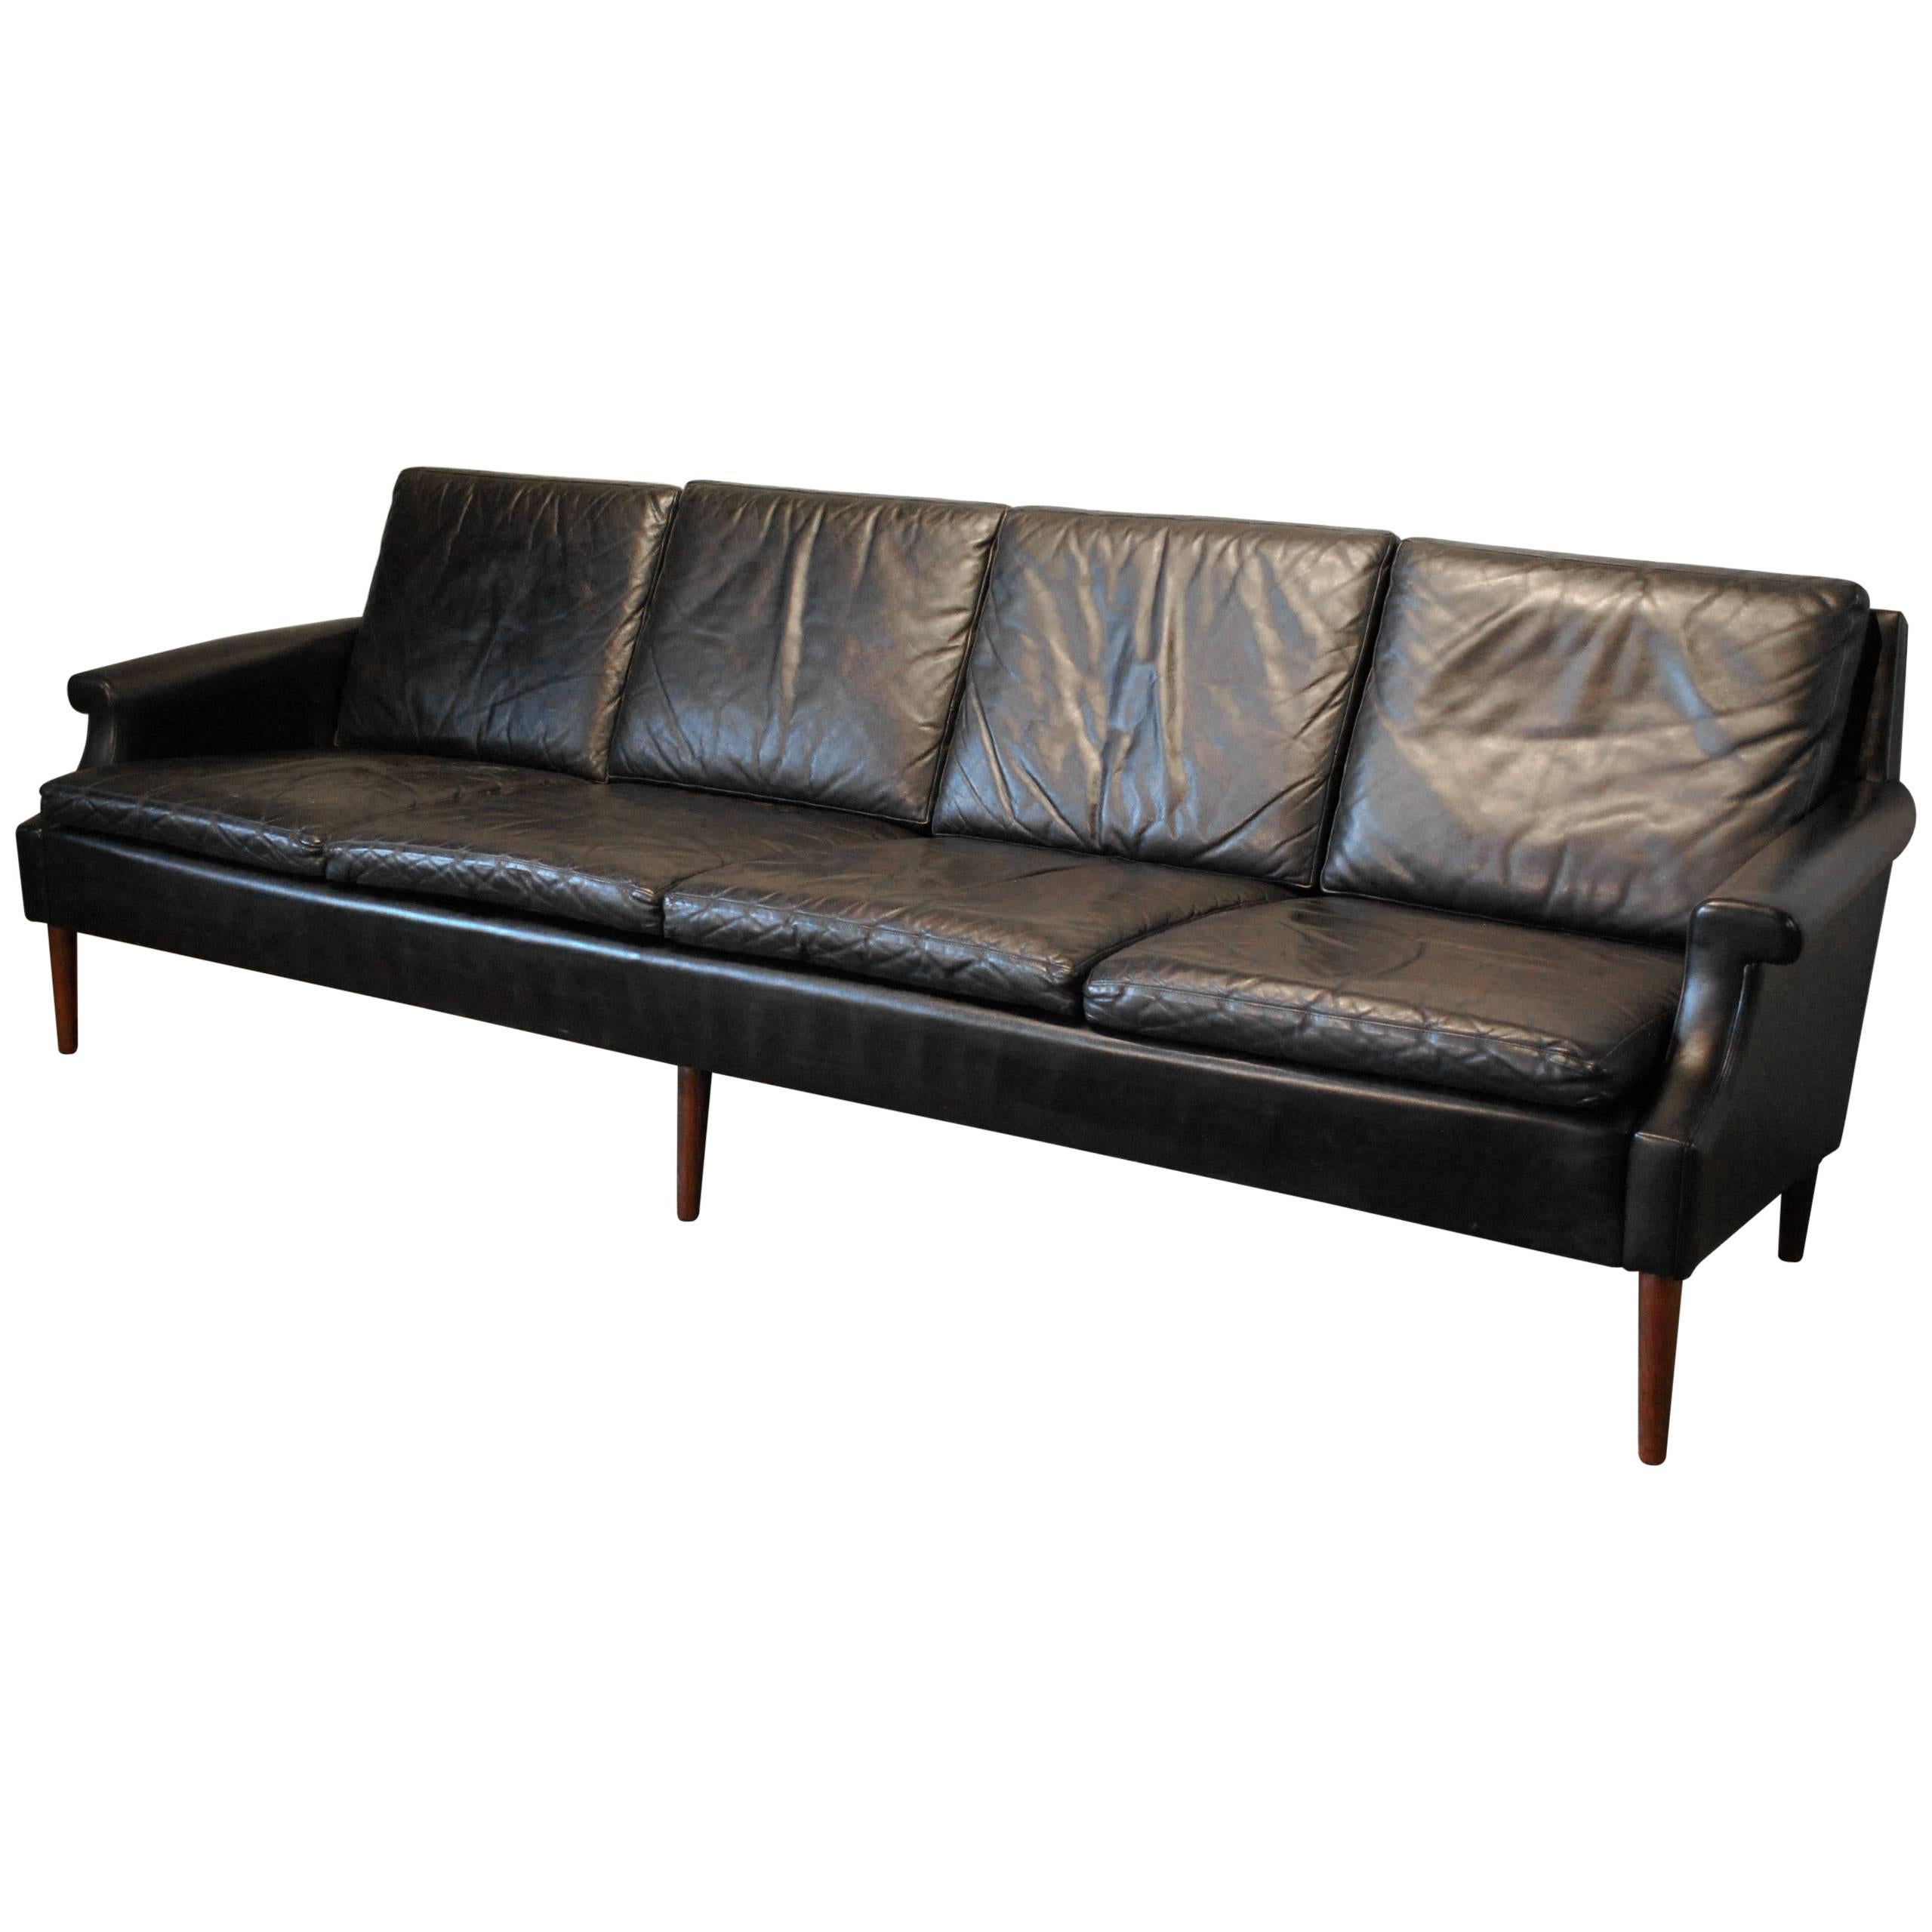 Georg Thams Designed Danish Modern Leather Sofa, circa 1960 For Sale